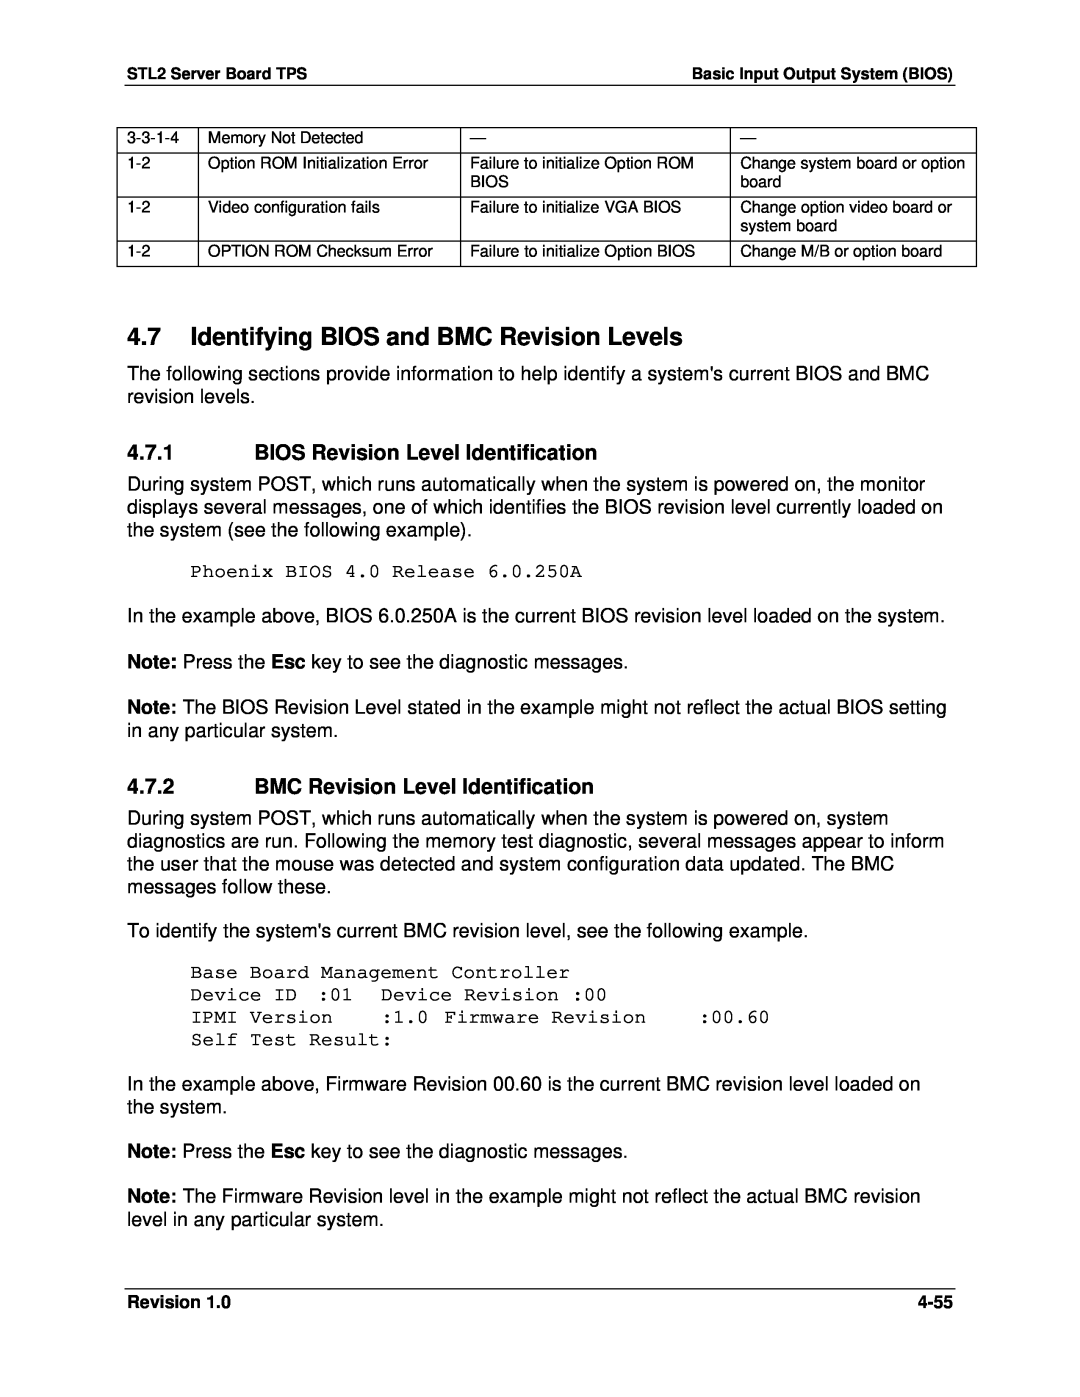 Intel STL2 manual 4.7Identifying BIOS and BMC Revision Levels, 4.7.1BIOS Revision Level Identification 